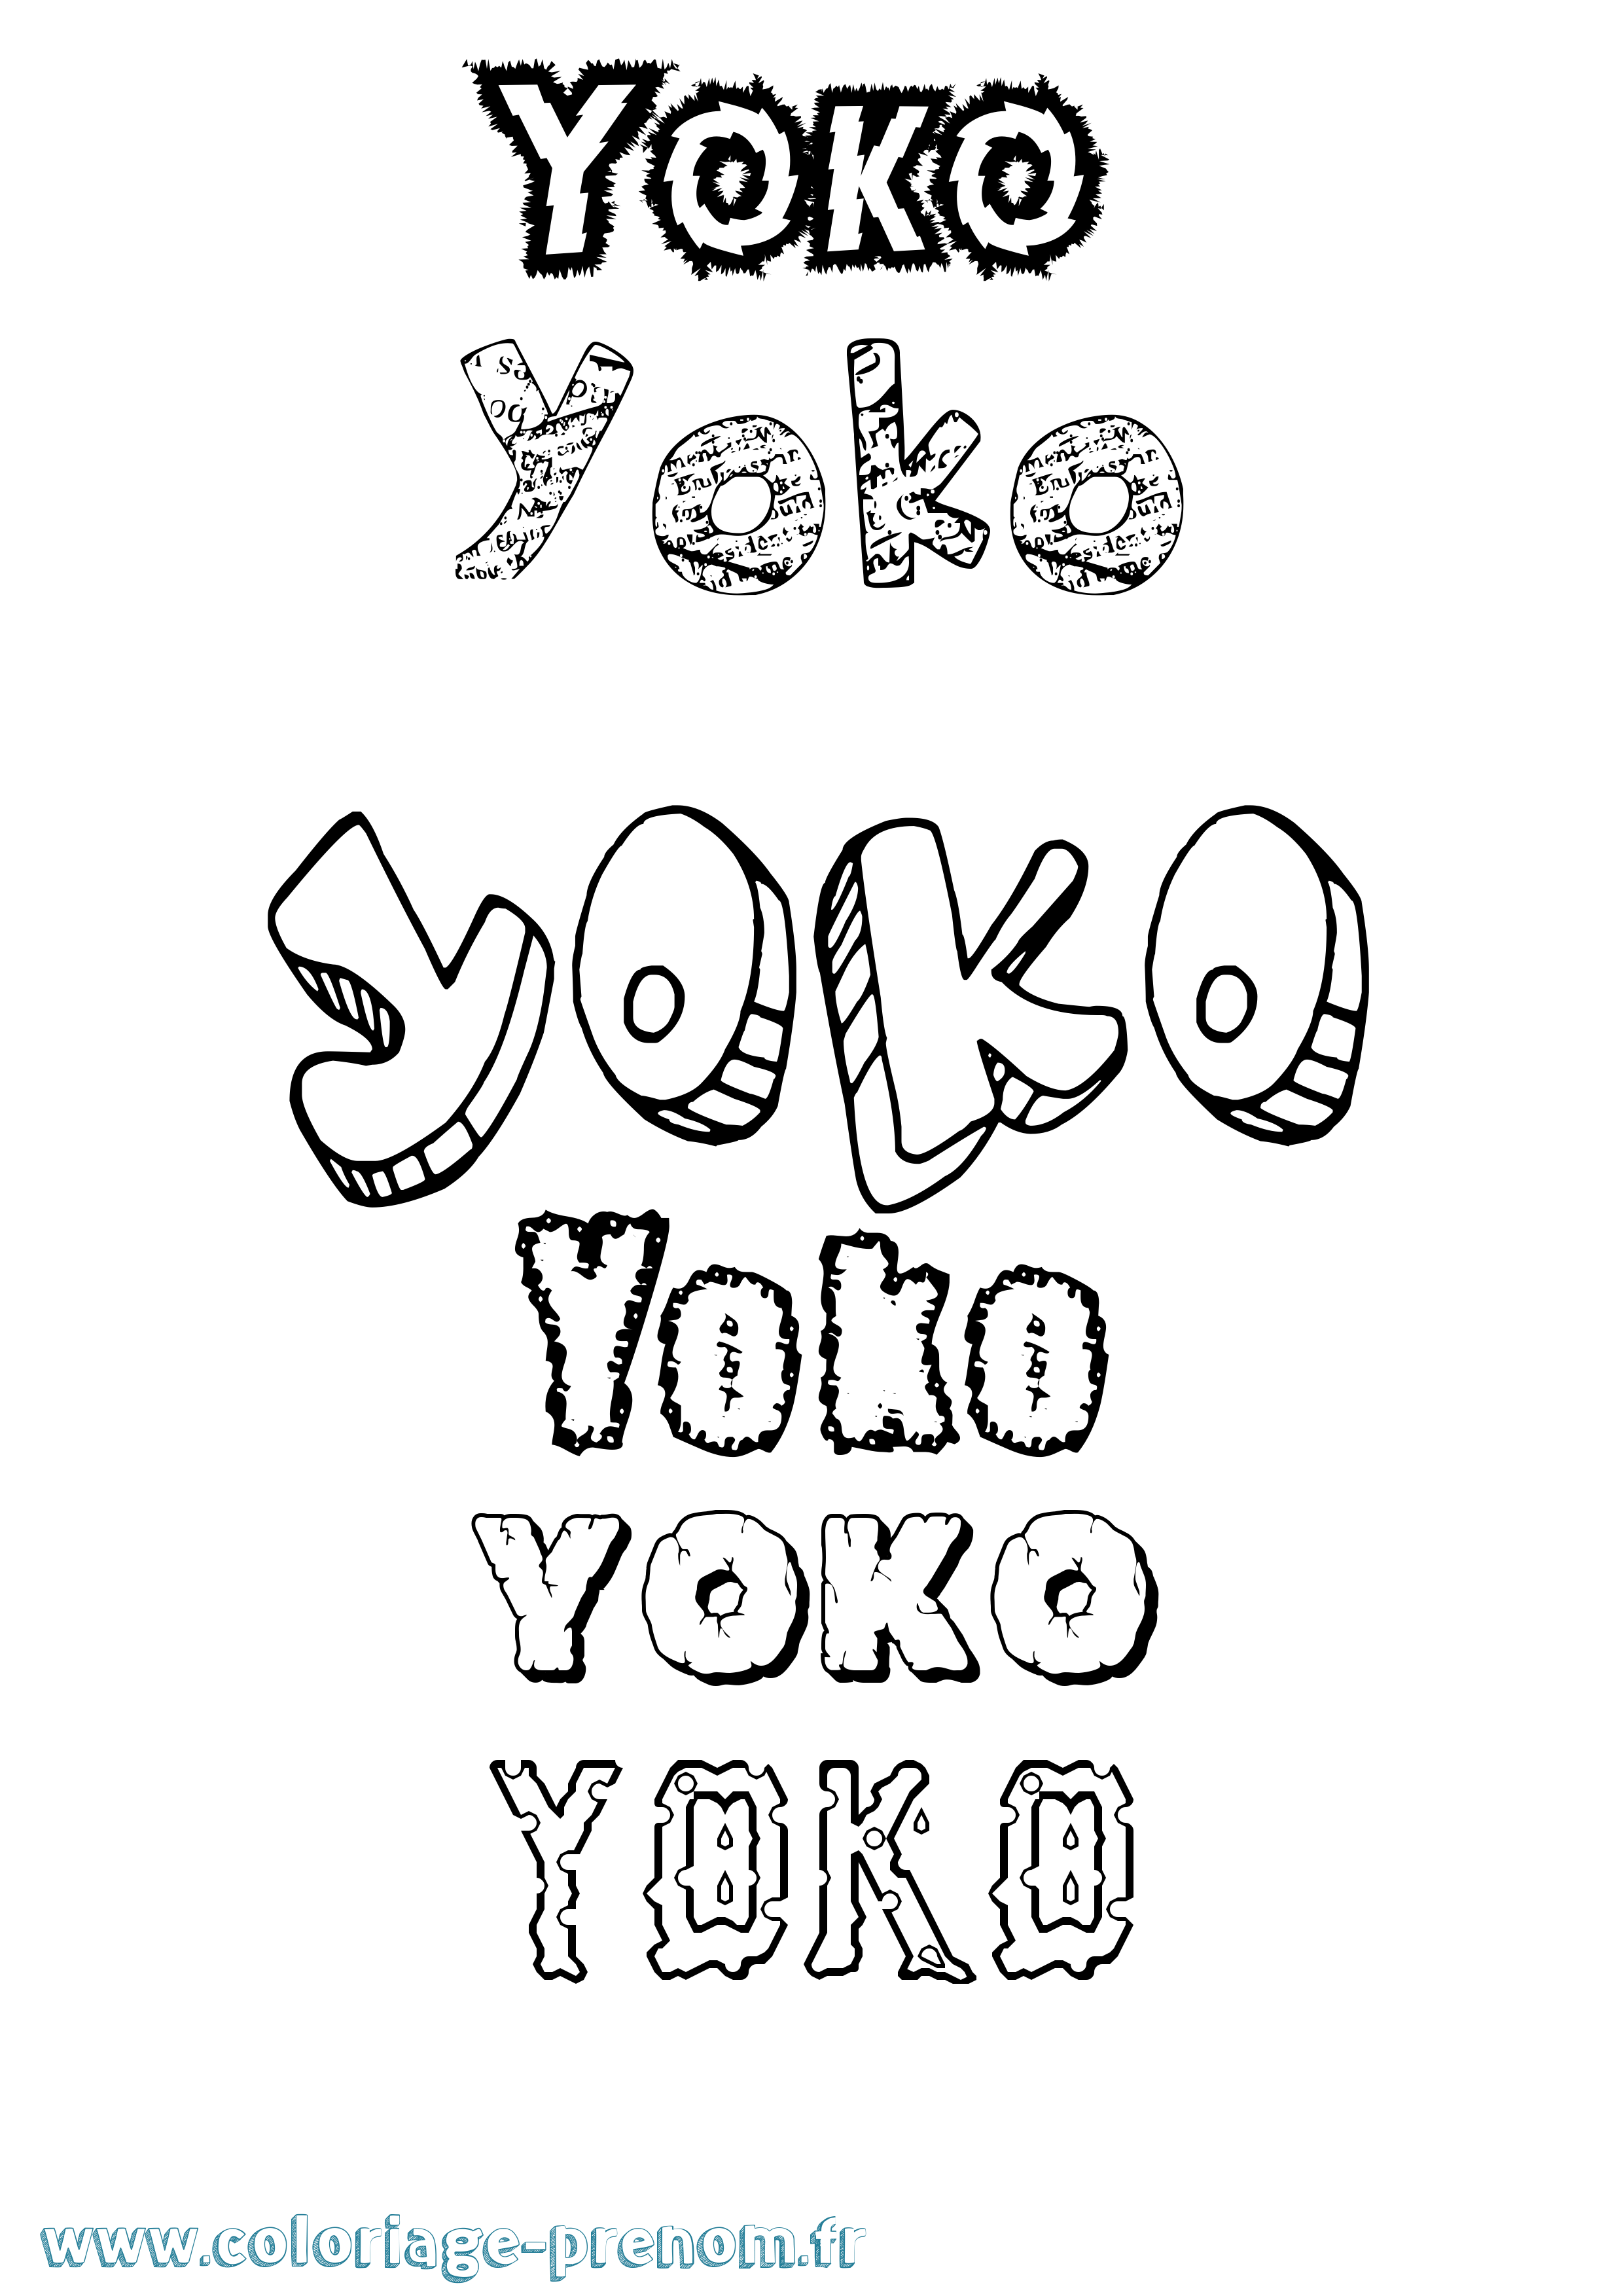 Coloriage prénom Yoko Destructuré